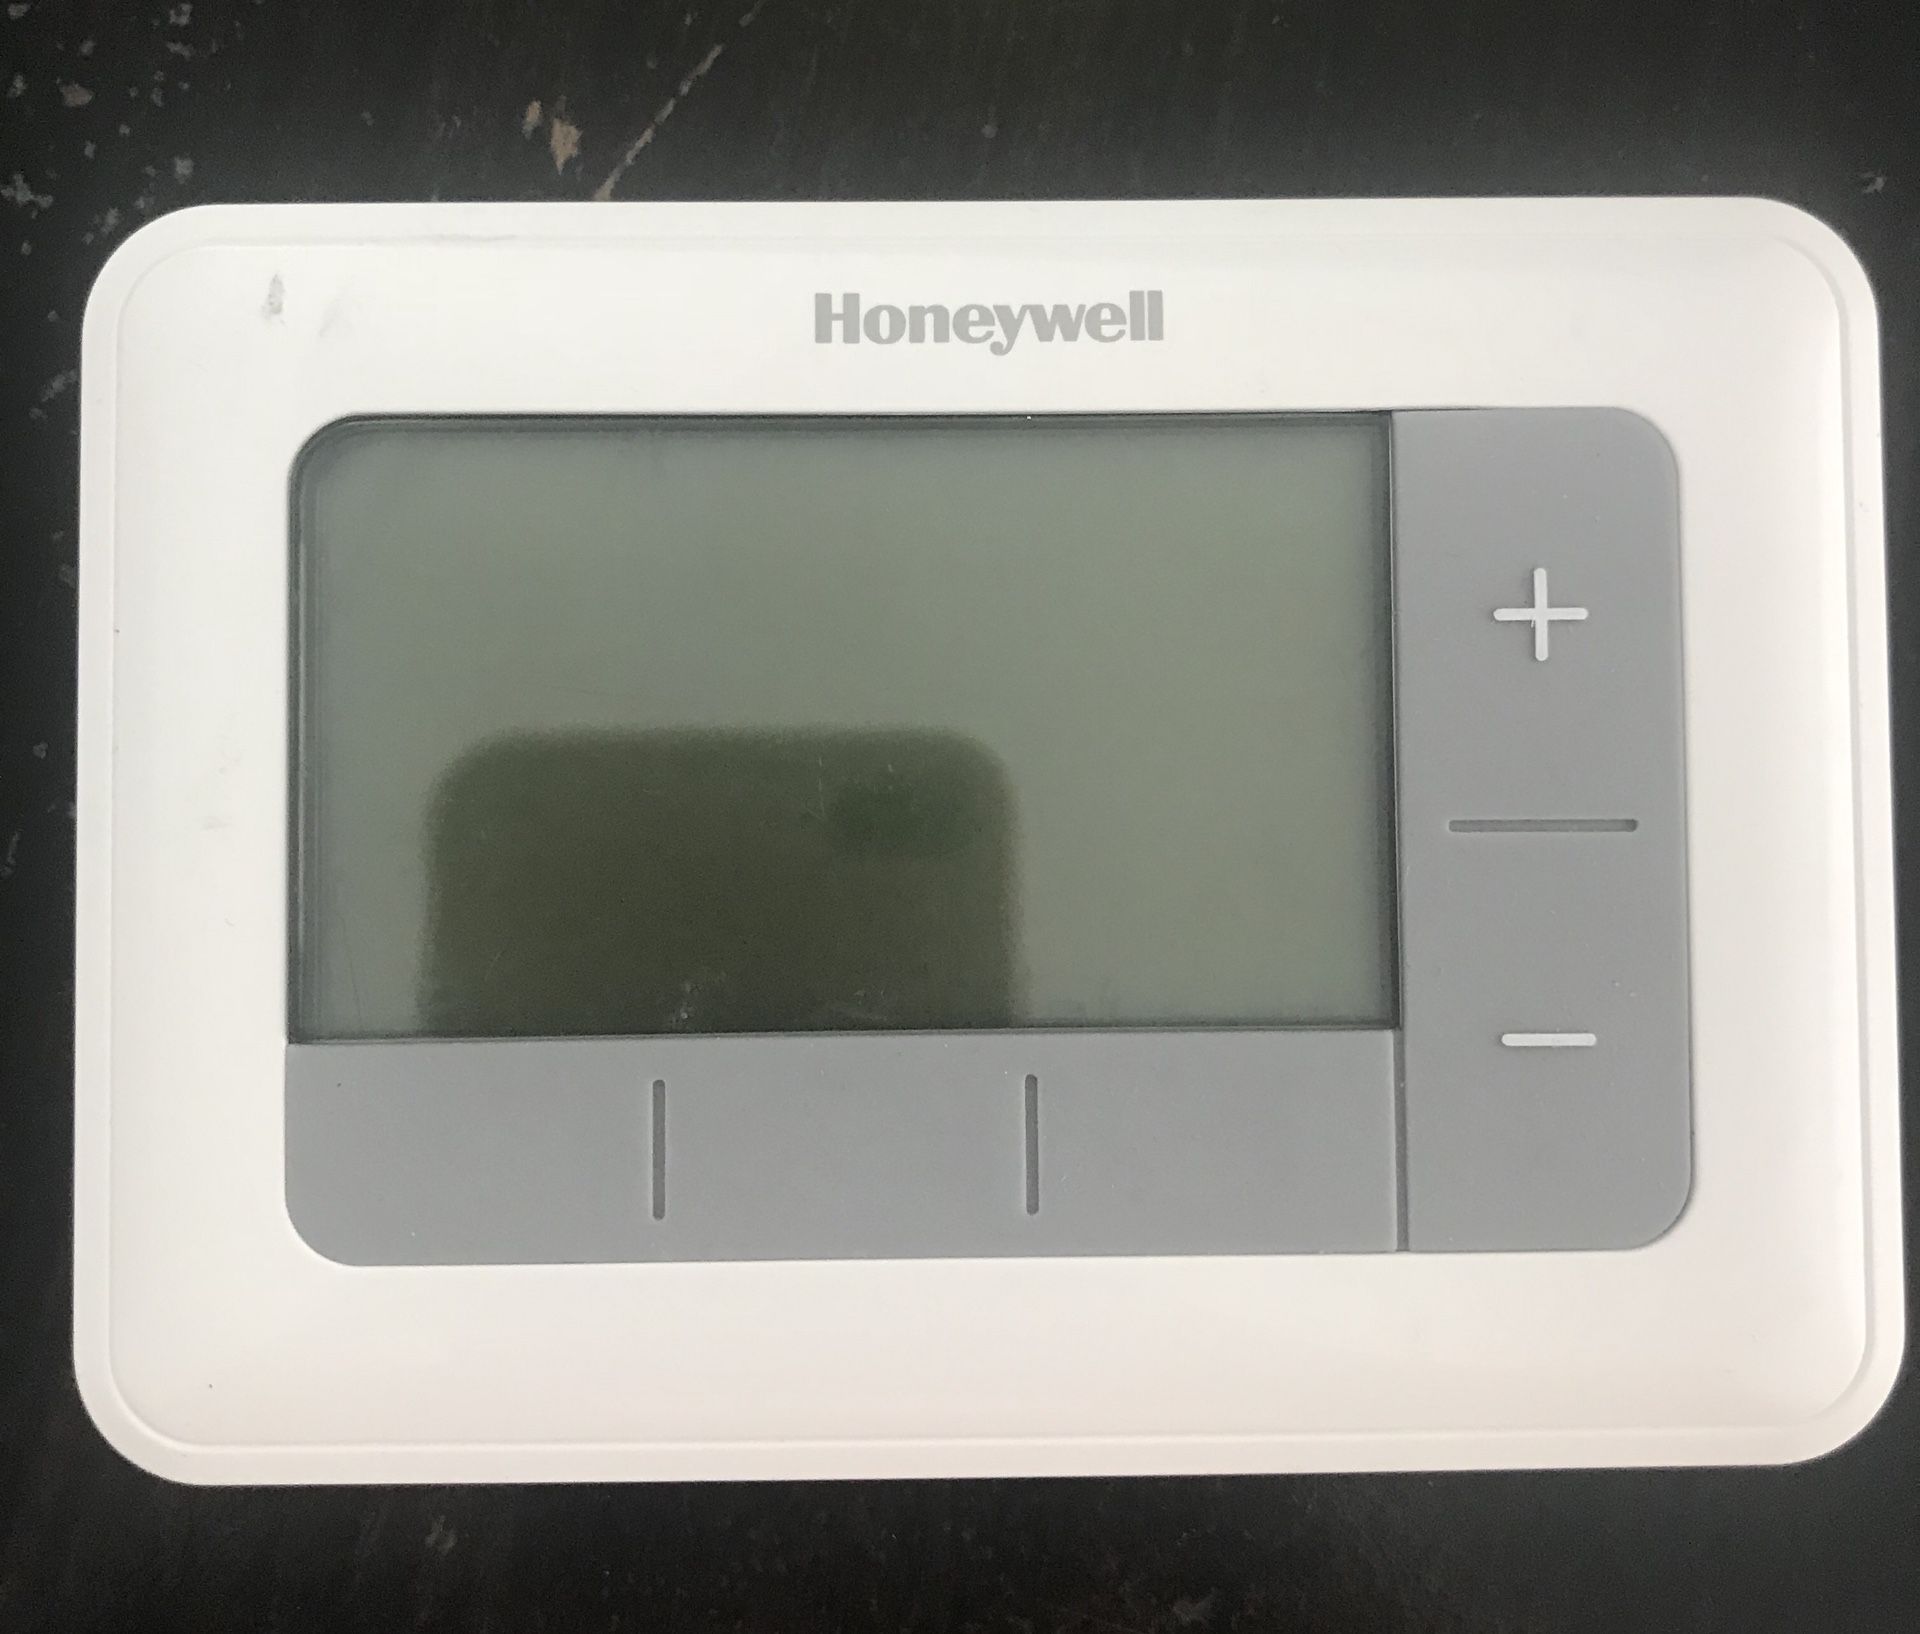 Honeywell A/C thermostat